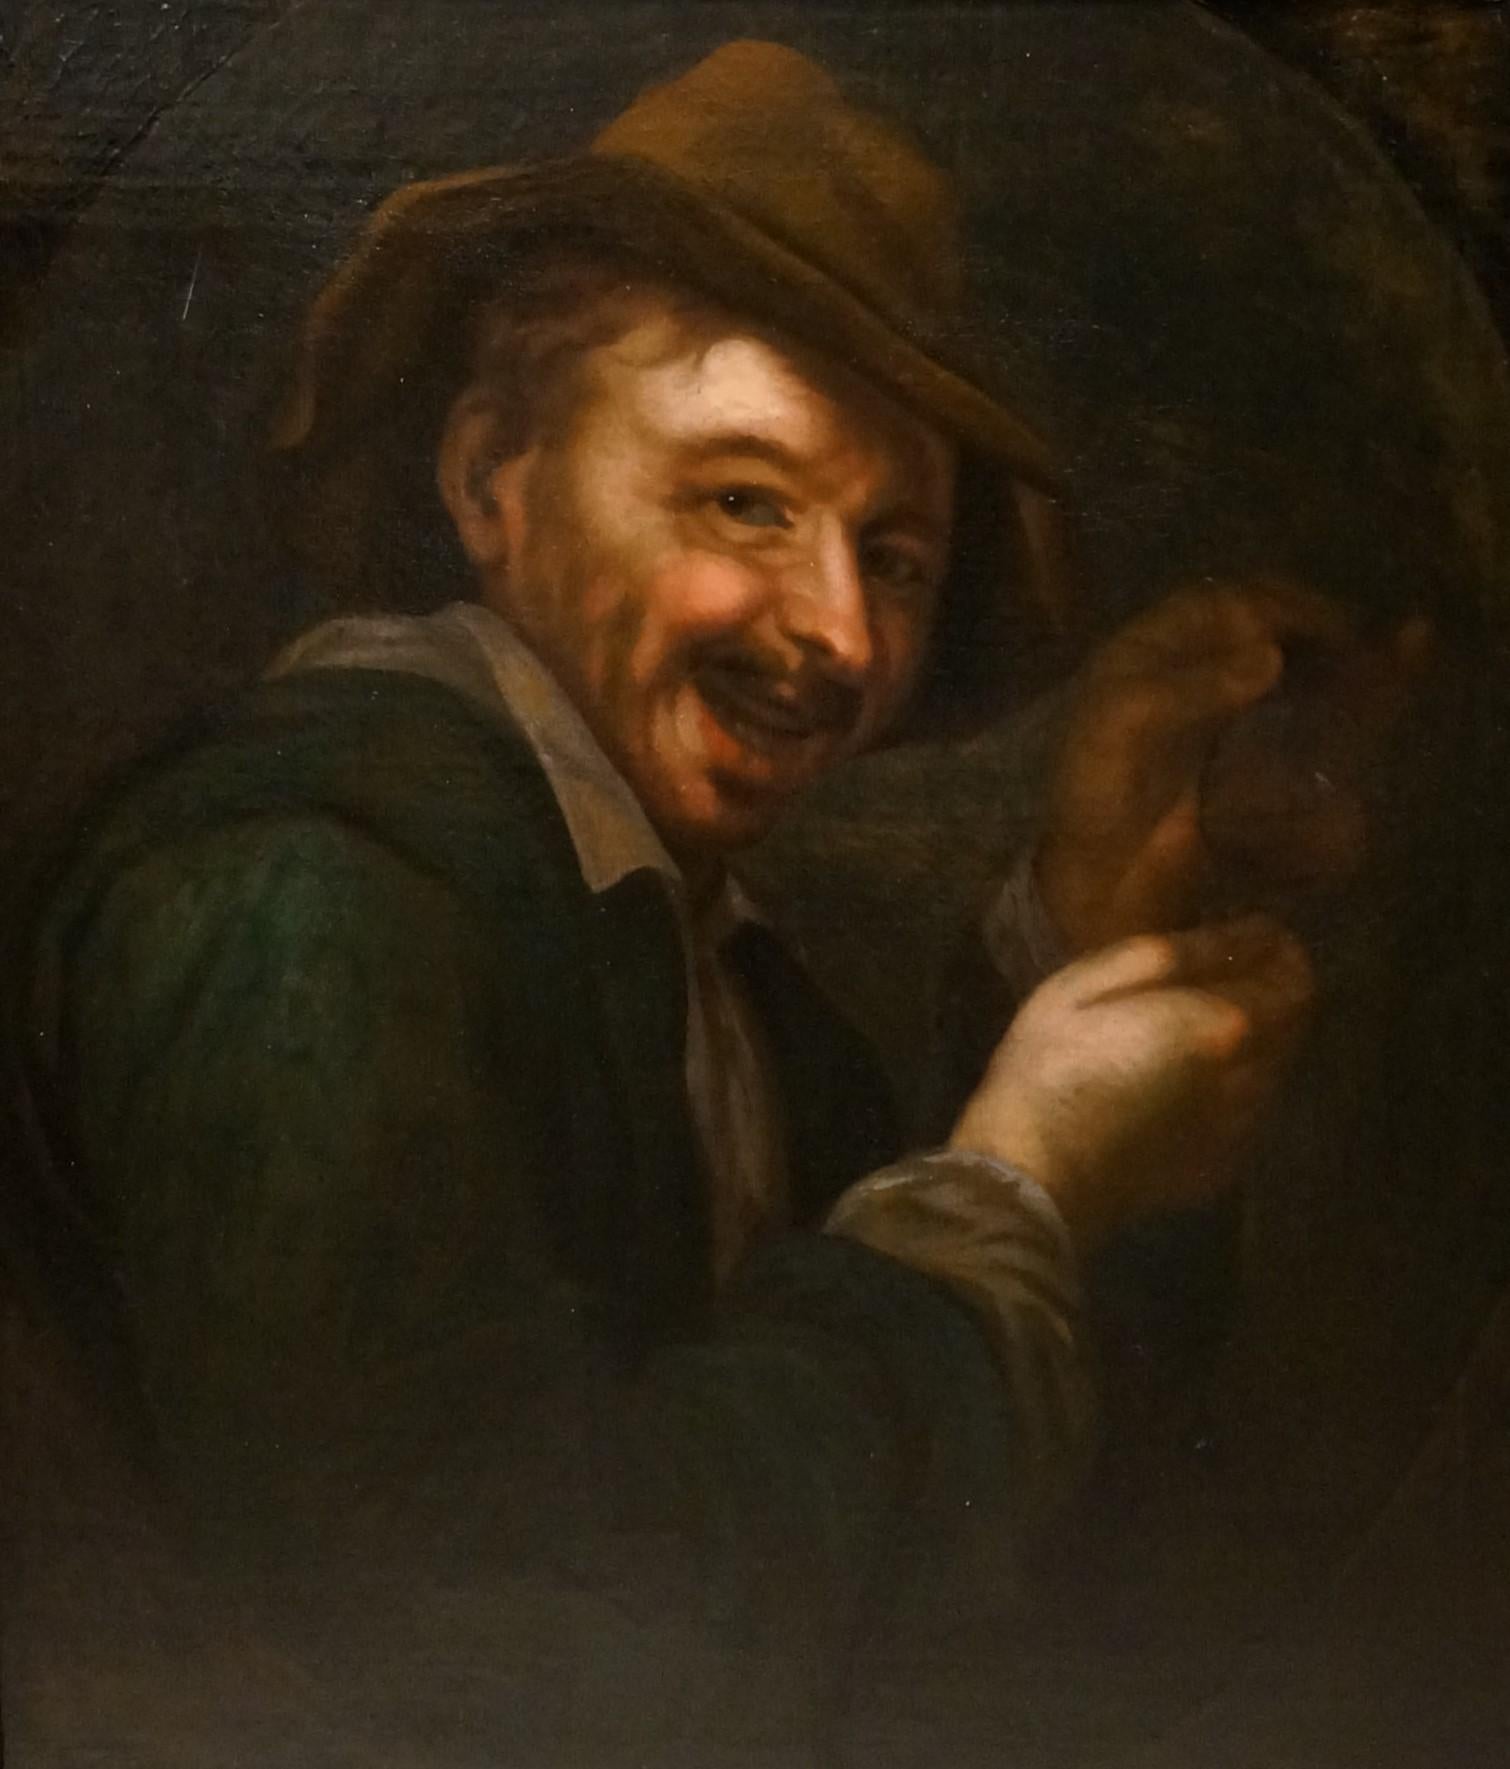 painting surprised man